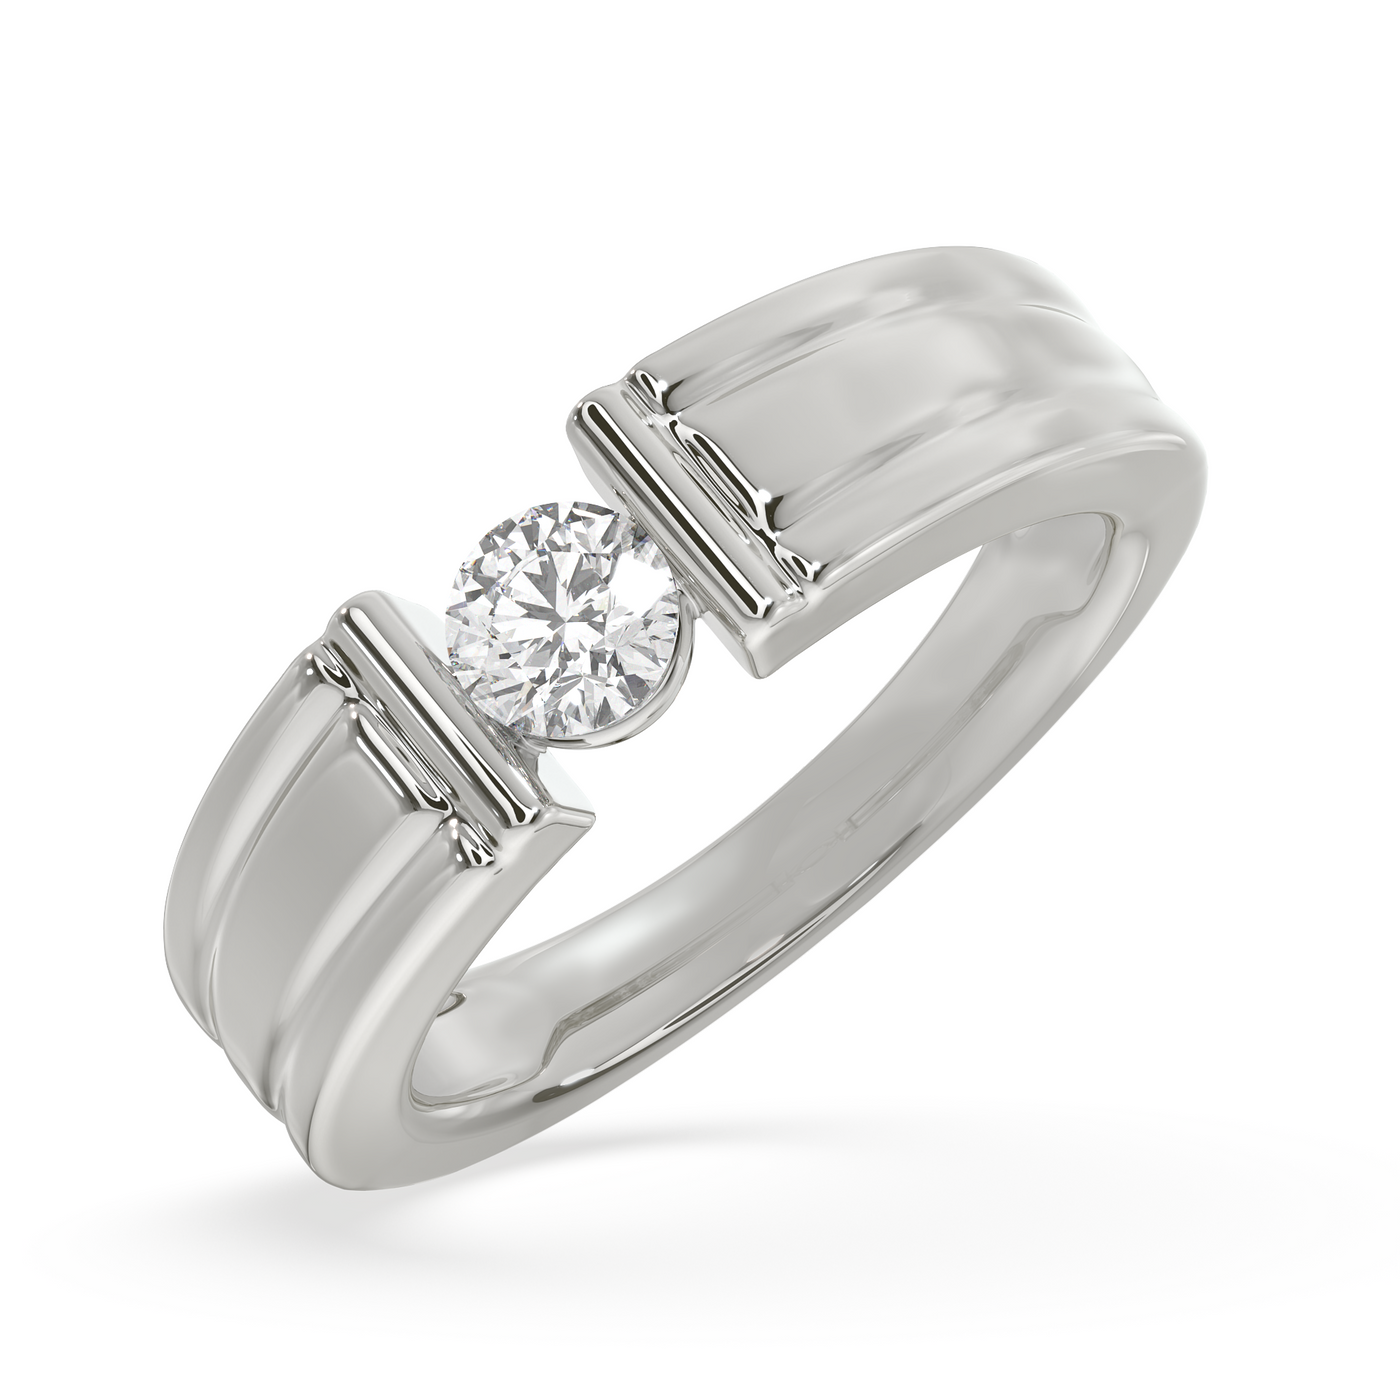 SY Men's Ring in Platinum, Tension-Set Diamond Ring